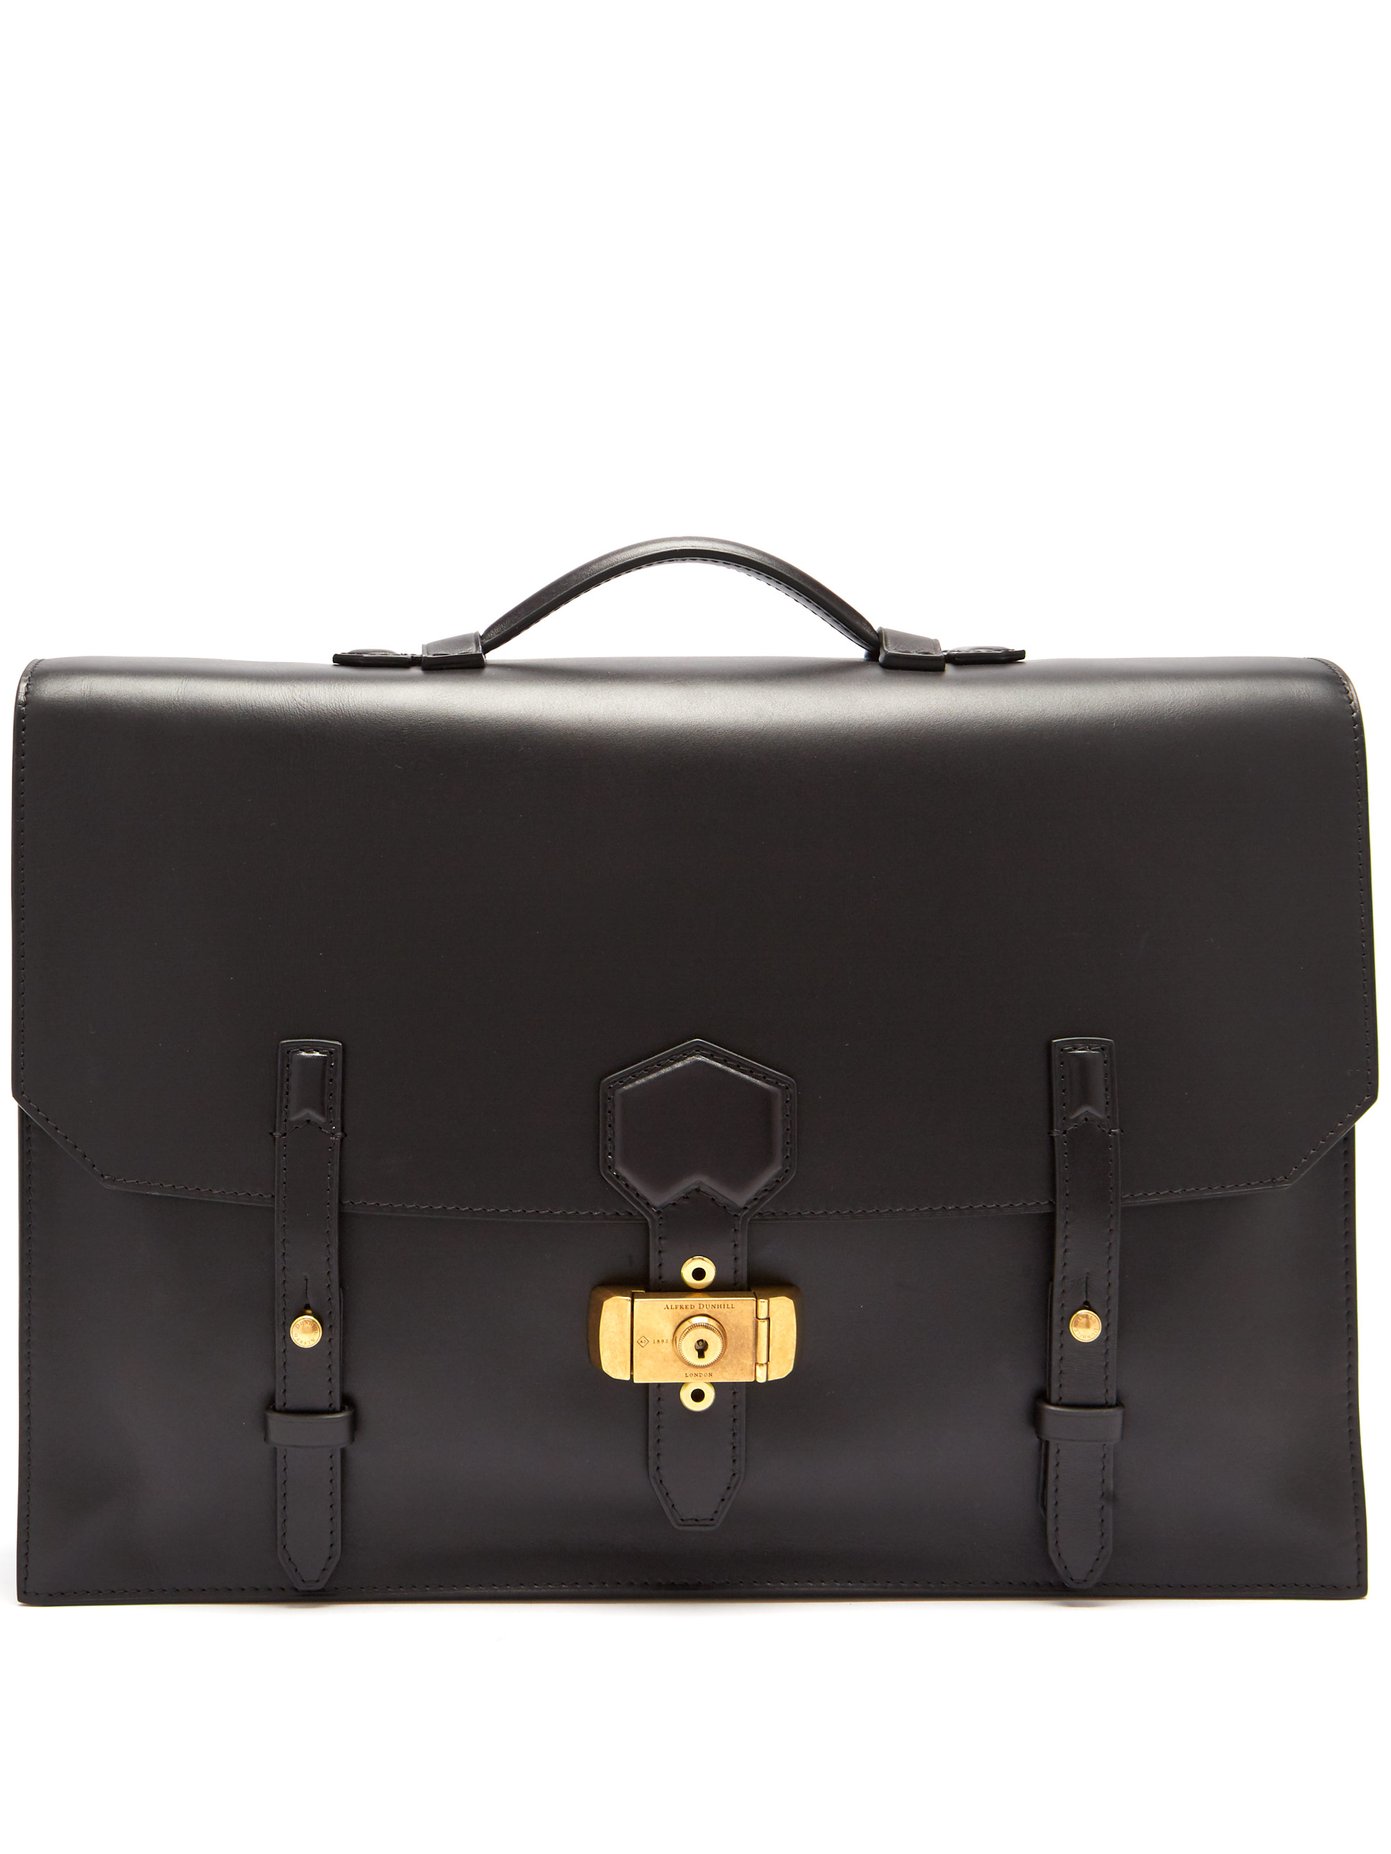 dunhill briefcase sale